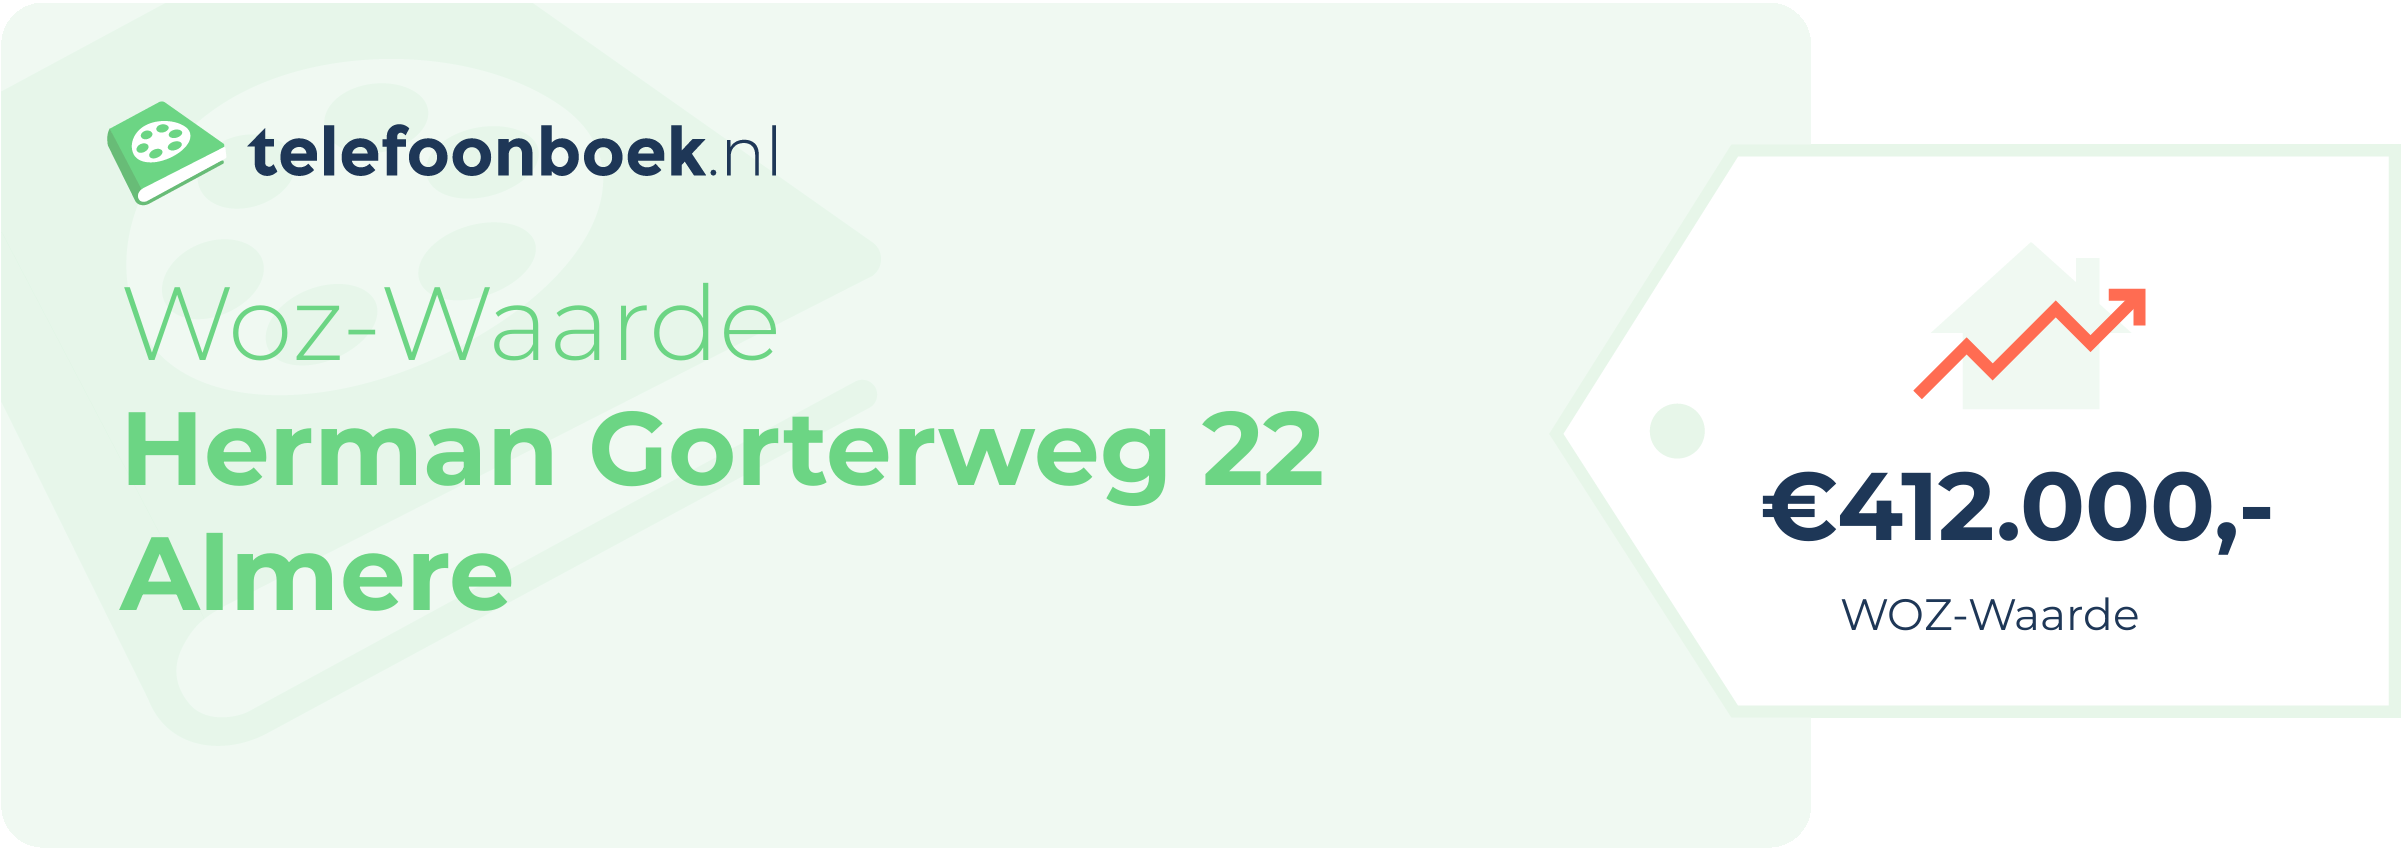 WOZ-waarde Herman Gorterweg 22 Almere